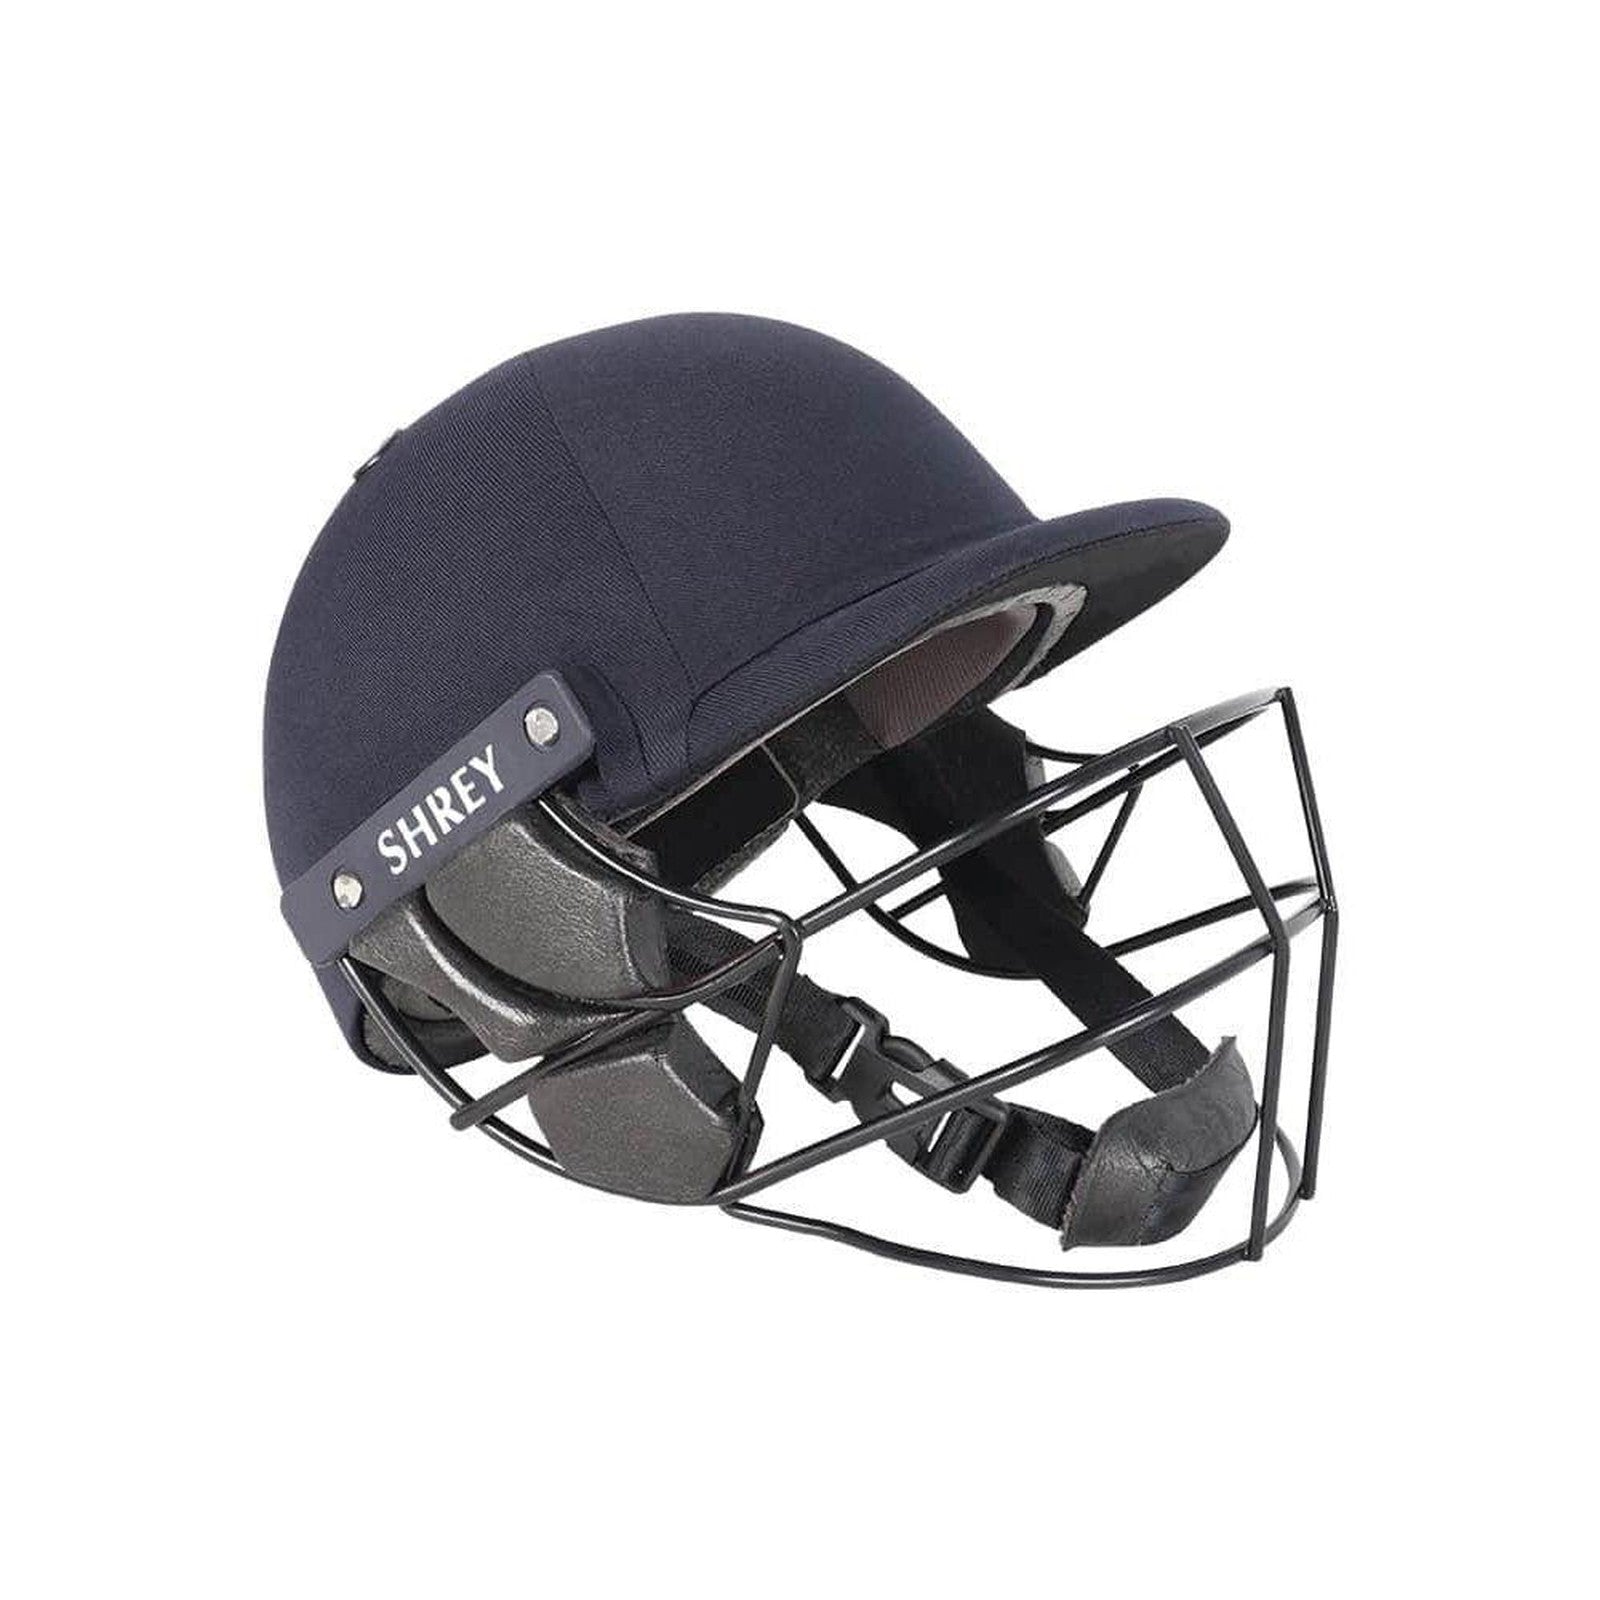 Shrey Armor 2.0 Cricket Helmet With Mild Steel Visor - Navy Youth